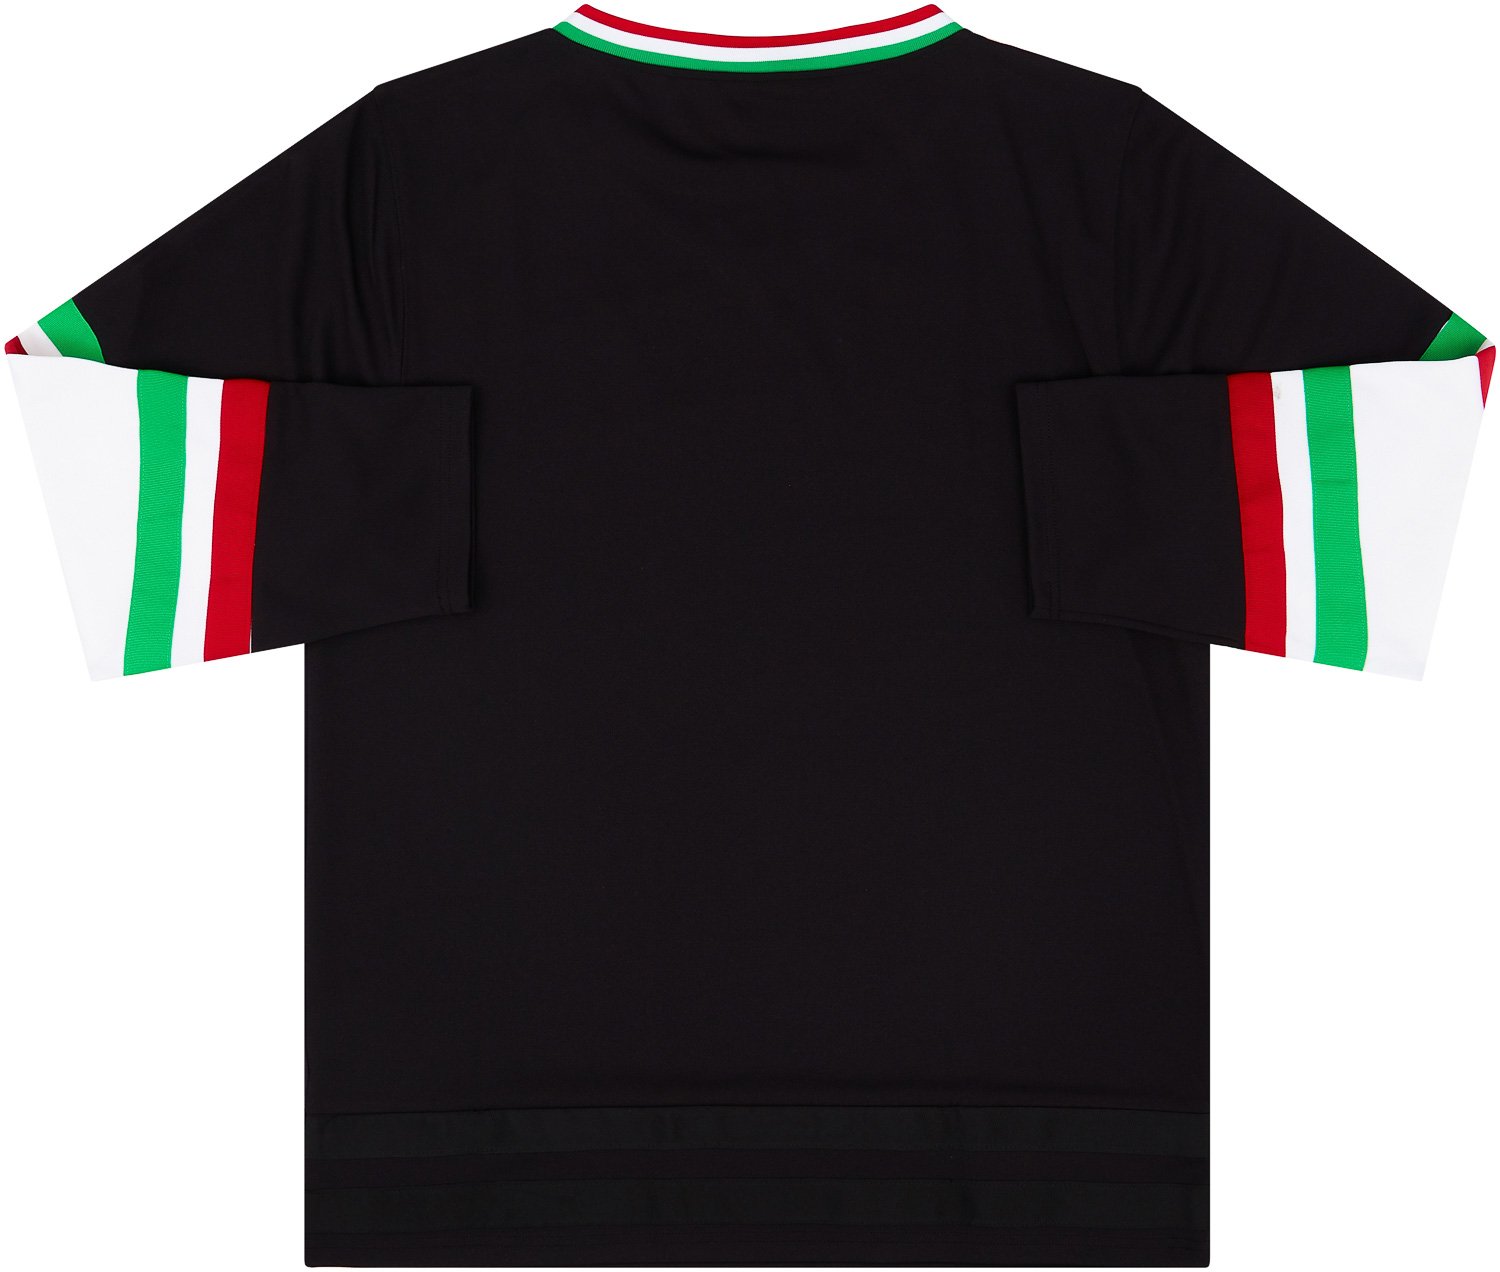 Puma AC Milan Winter Shirt 2022 2023 Adults